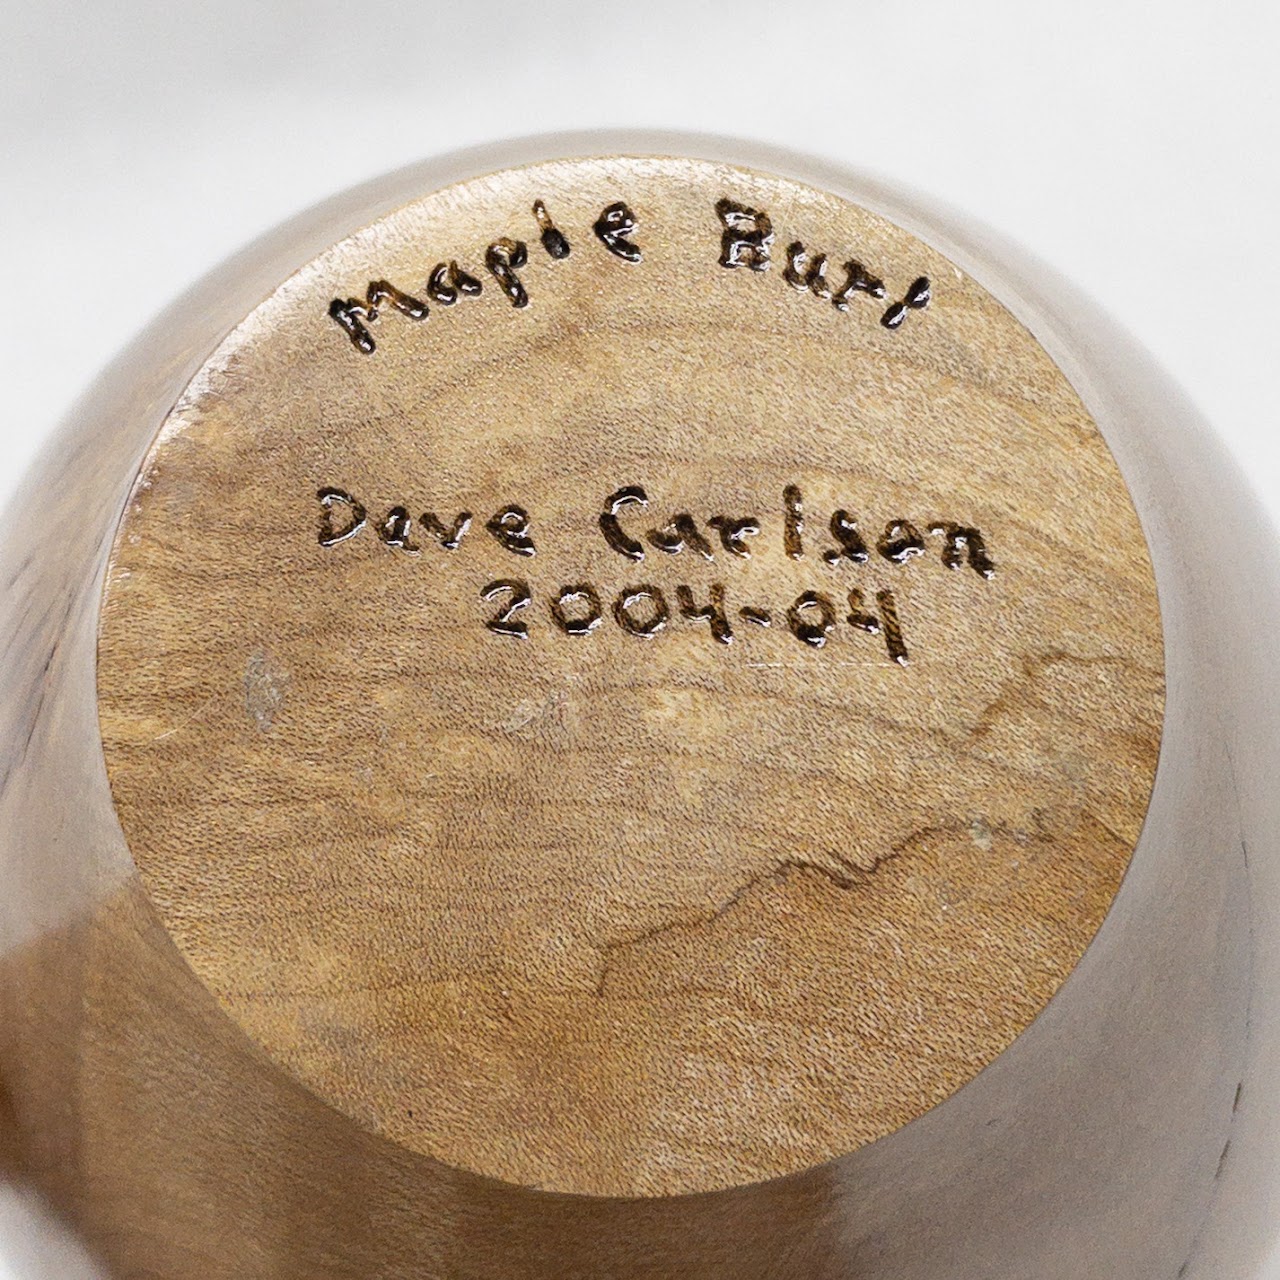 Dave Carlson Signed Burled Maple Urn